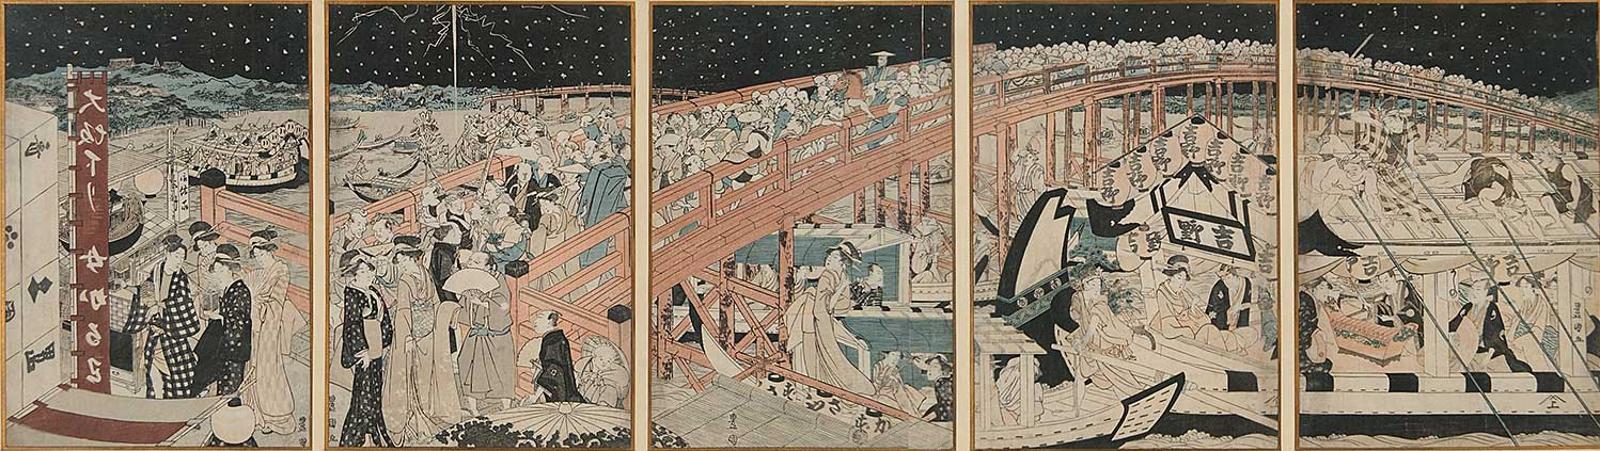 Utagawa II Kunisada - Untitled - Opening Night